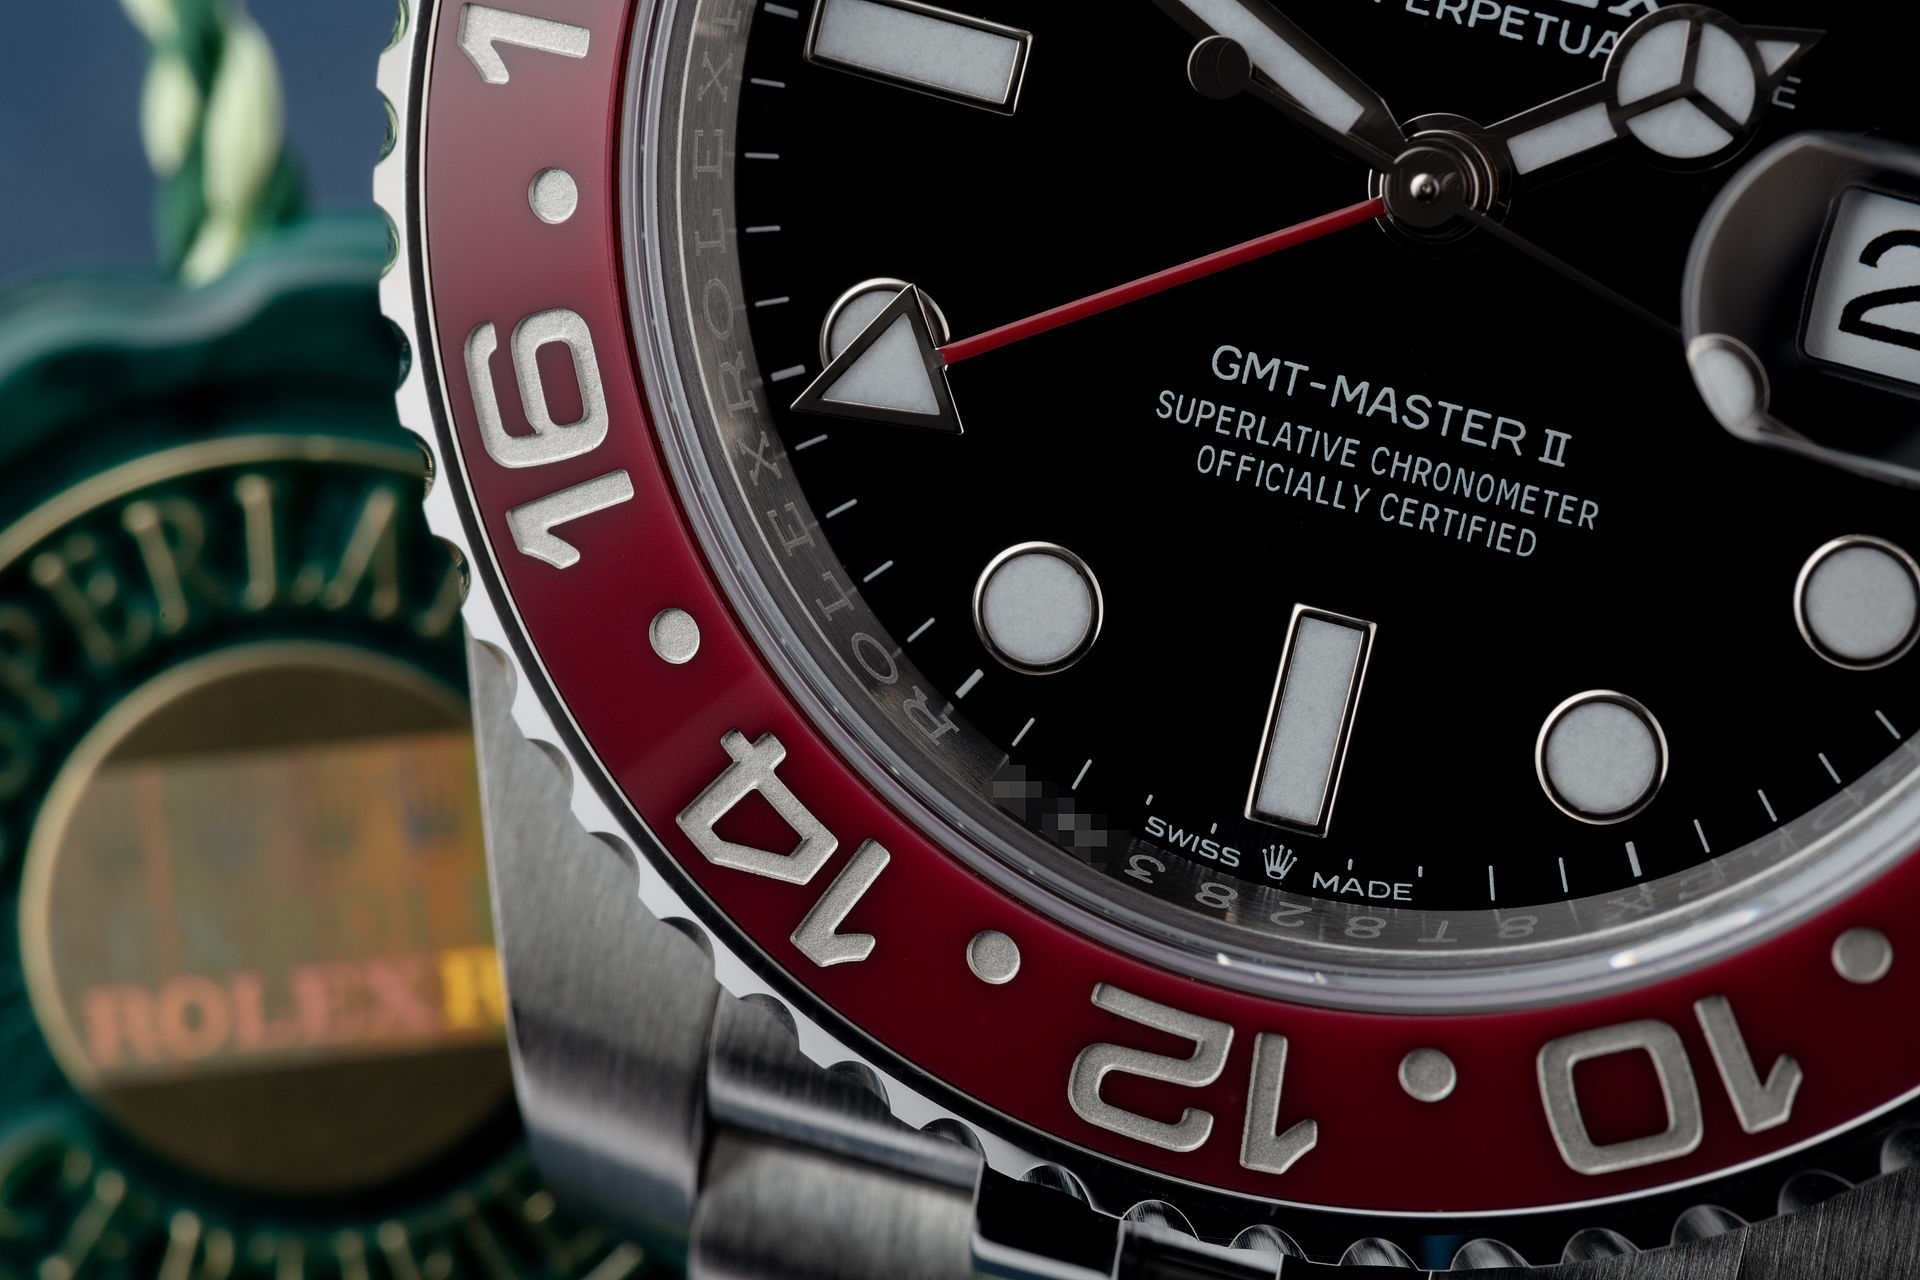 ref 126710BLRO | Latest Model '5 Year Warranty' | Rolex GMT-Master II